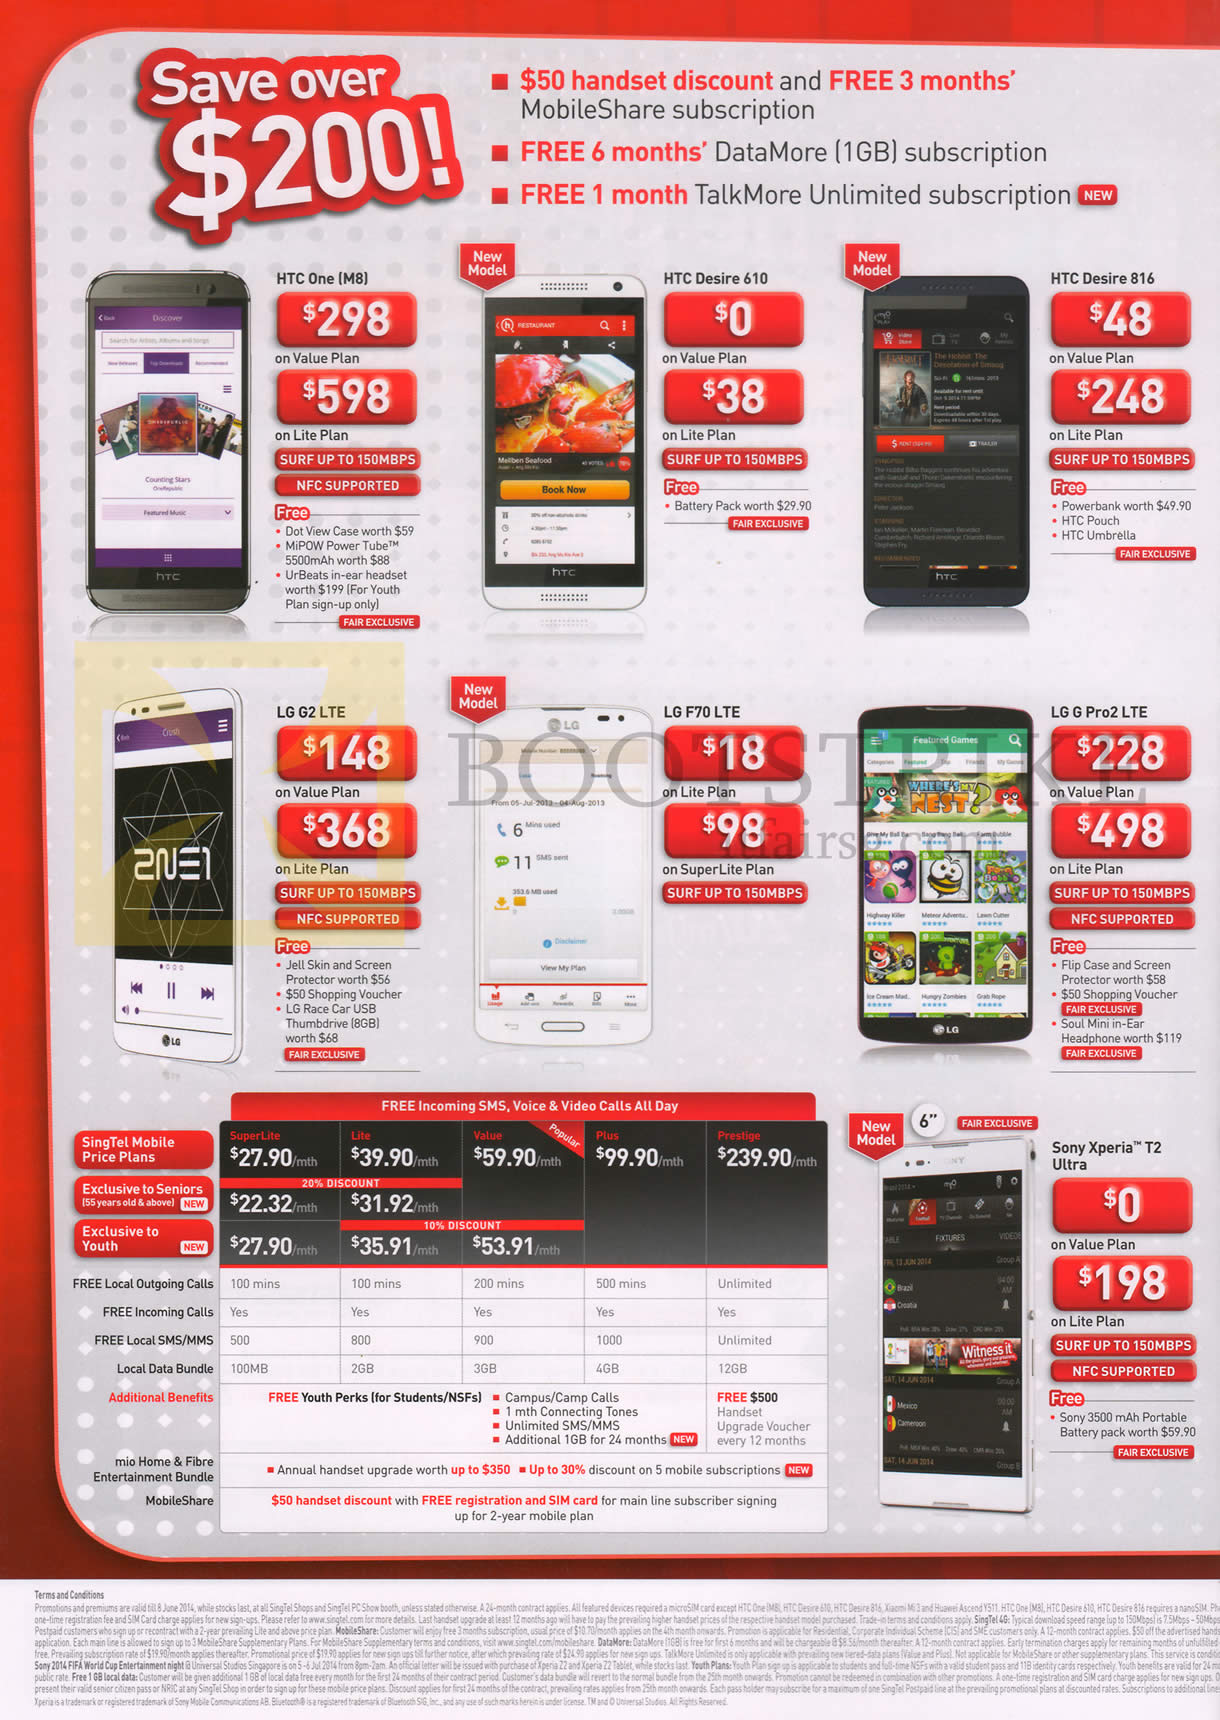 PC SHOW 2014 price list image brochure of Singtel Mobile HTC One M8, 610, 816, LG G2 F70 G Pro2, Sony Xperia T2, Plans SuperLite Lite Value Plus